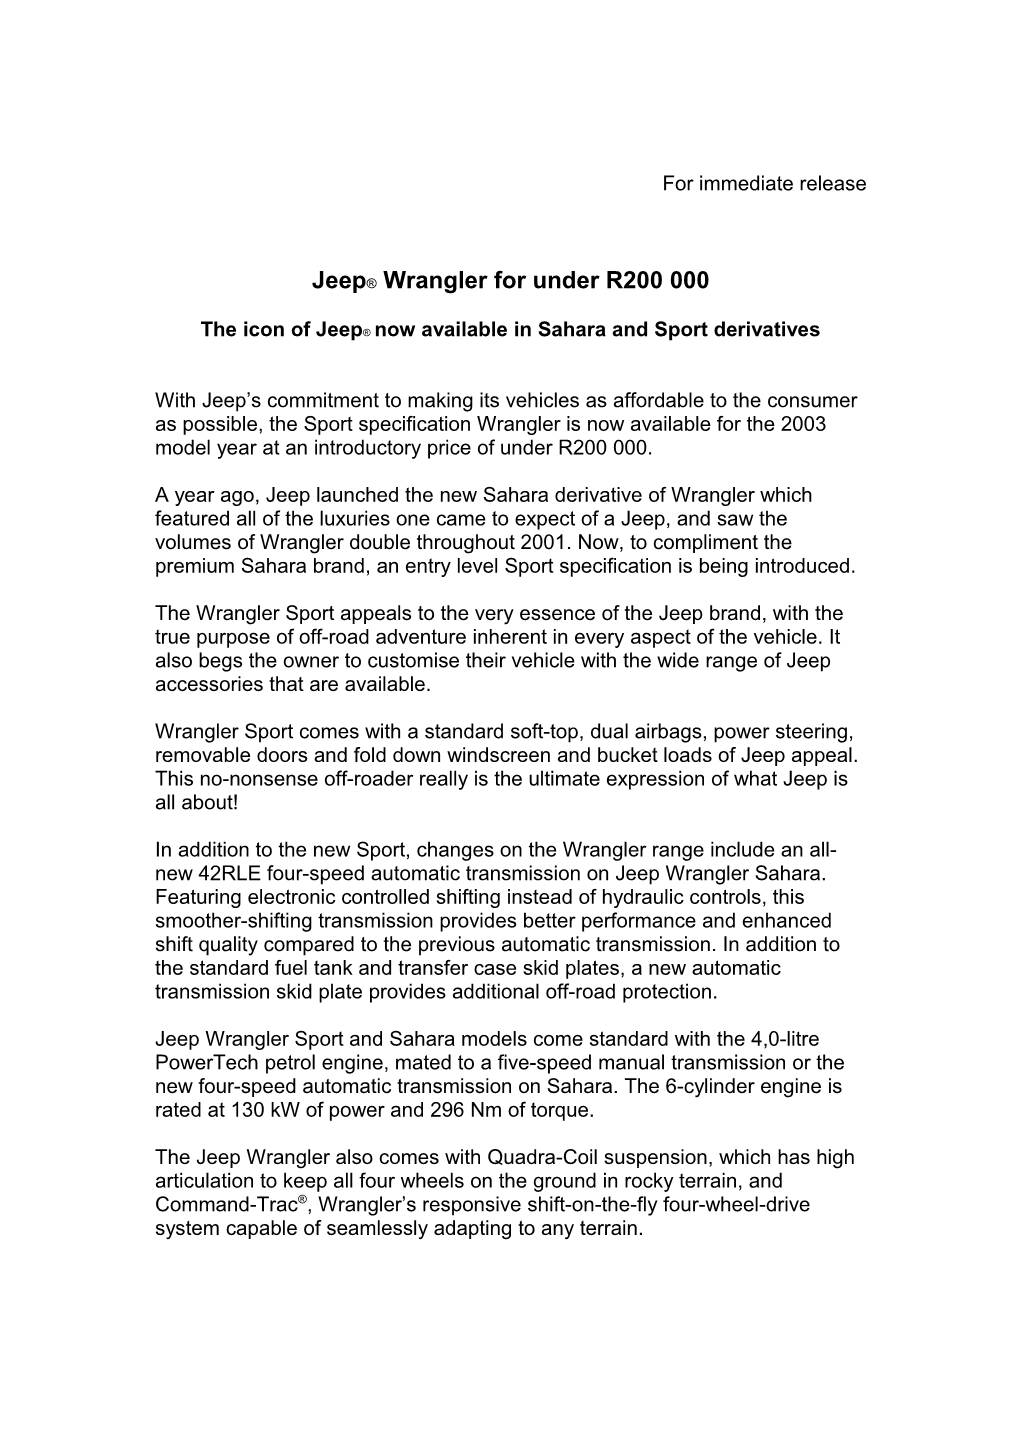 Jeep Wrangler for Under R200 000